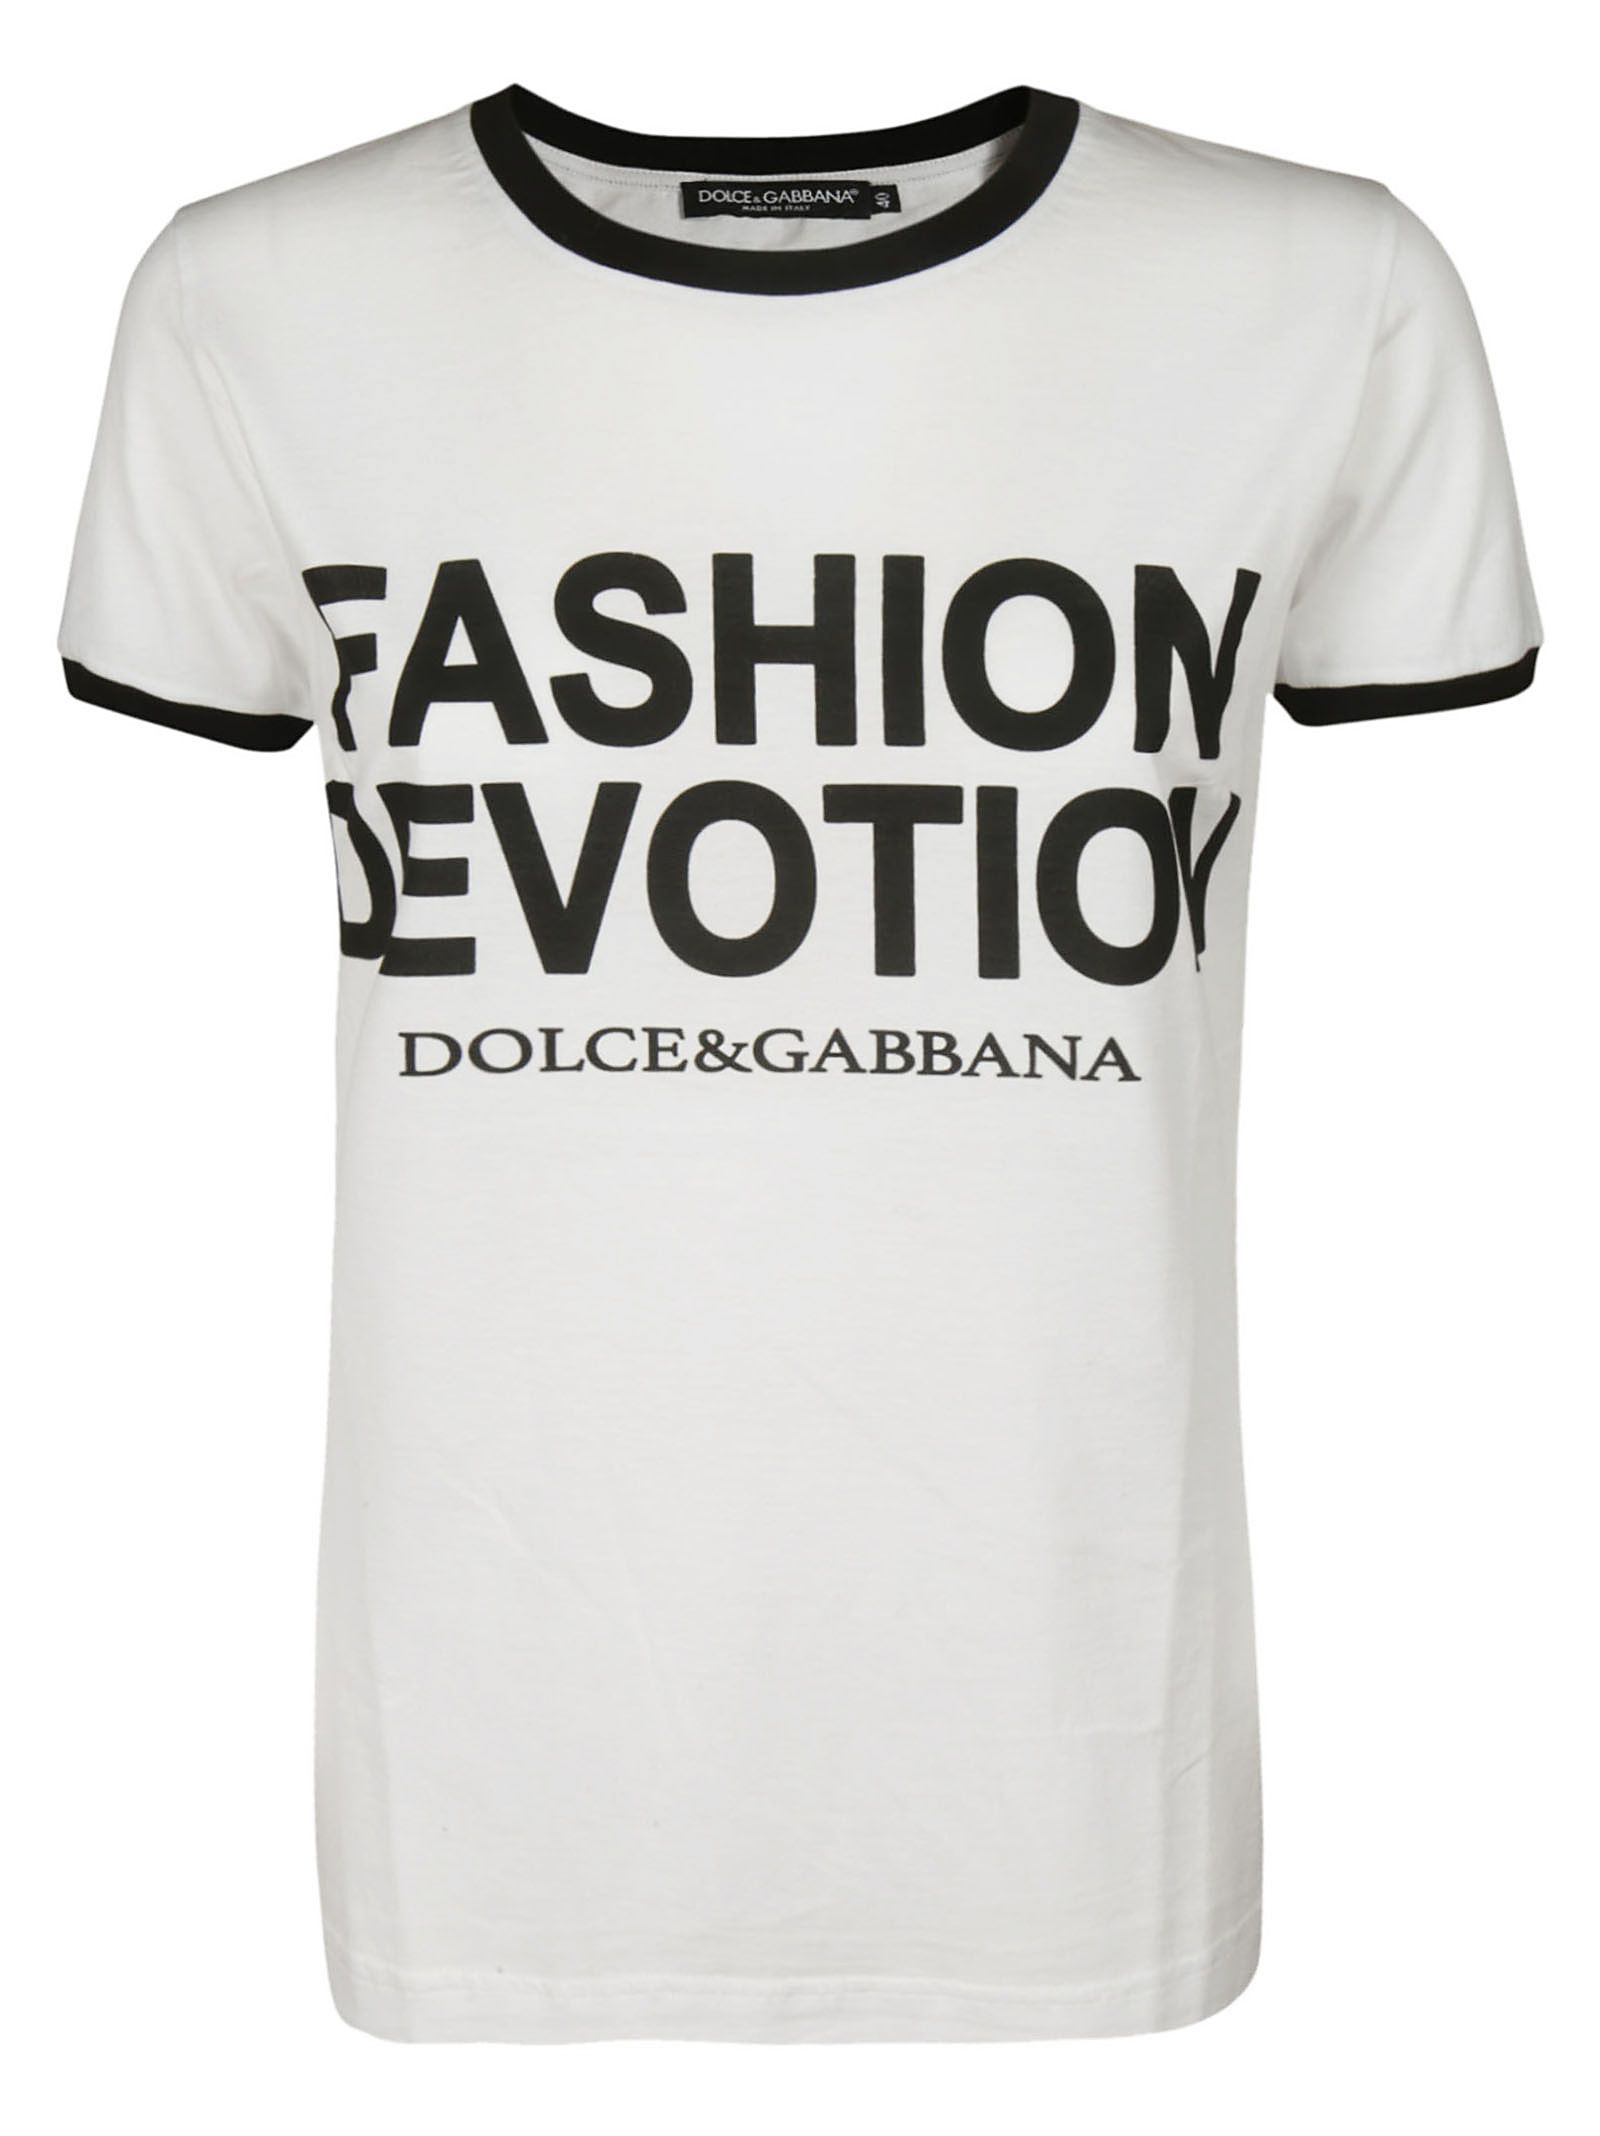 Dolce & Gabbana Fashion Devotion T-shirt In Bianco | ModeSens